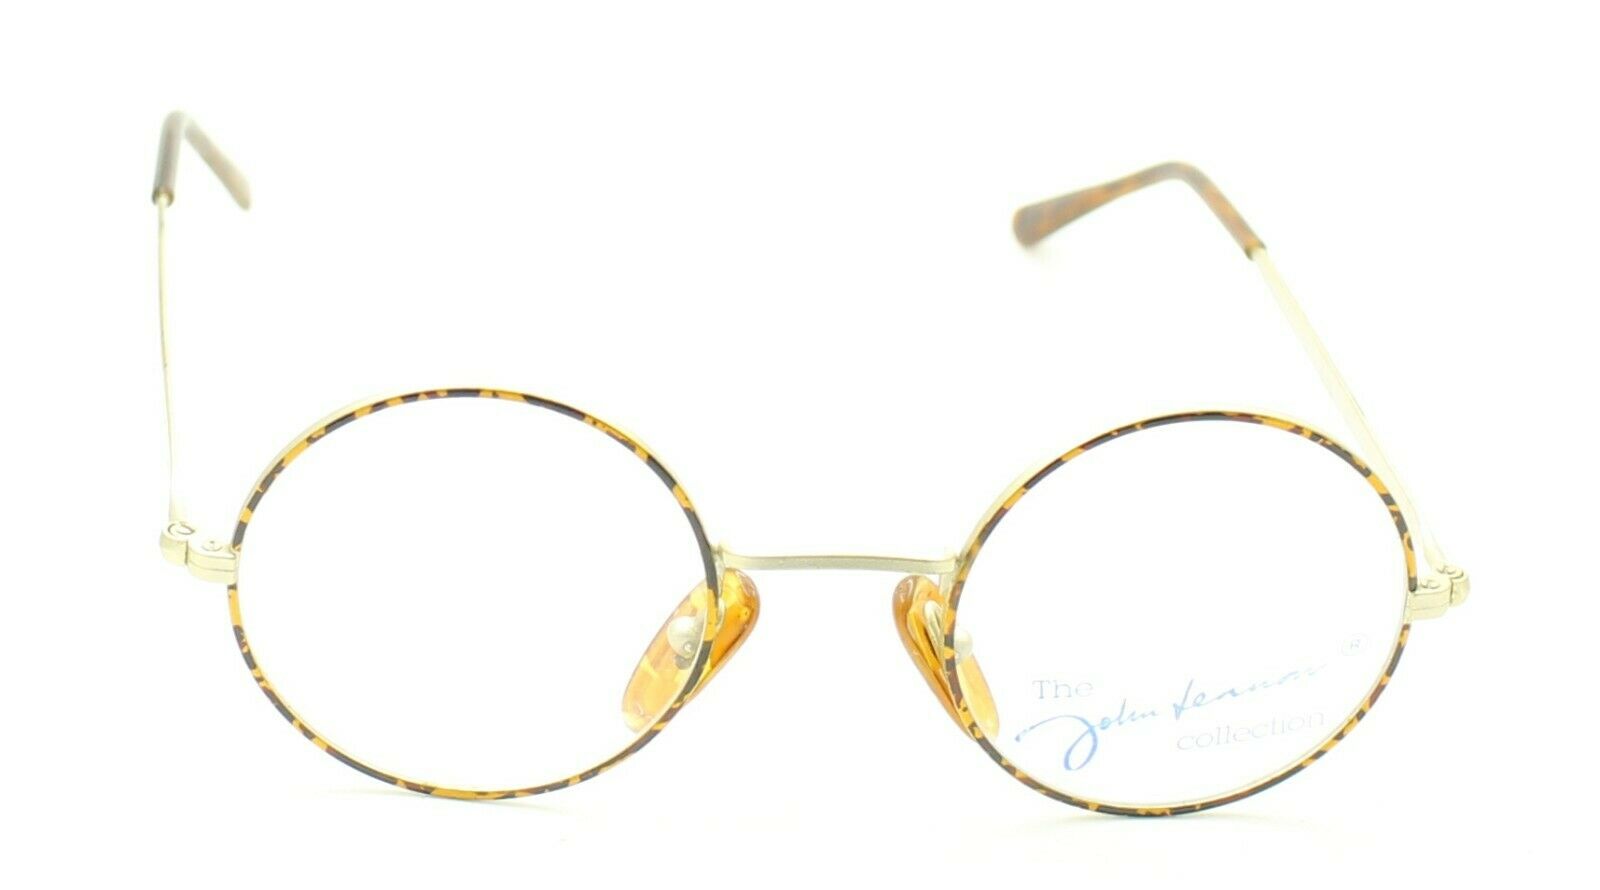 JOHN LENNON JL-01 10 REVOLUTION Vintage Gents Eyewear RX Optical FRAMES Glasses